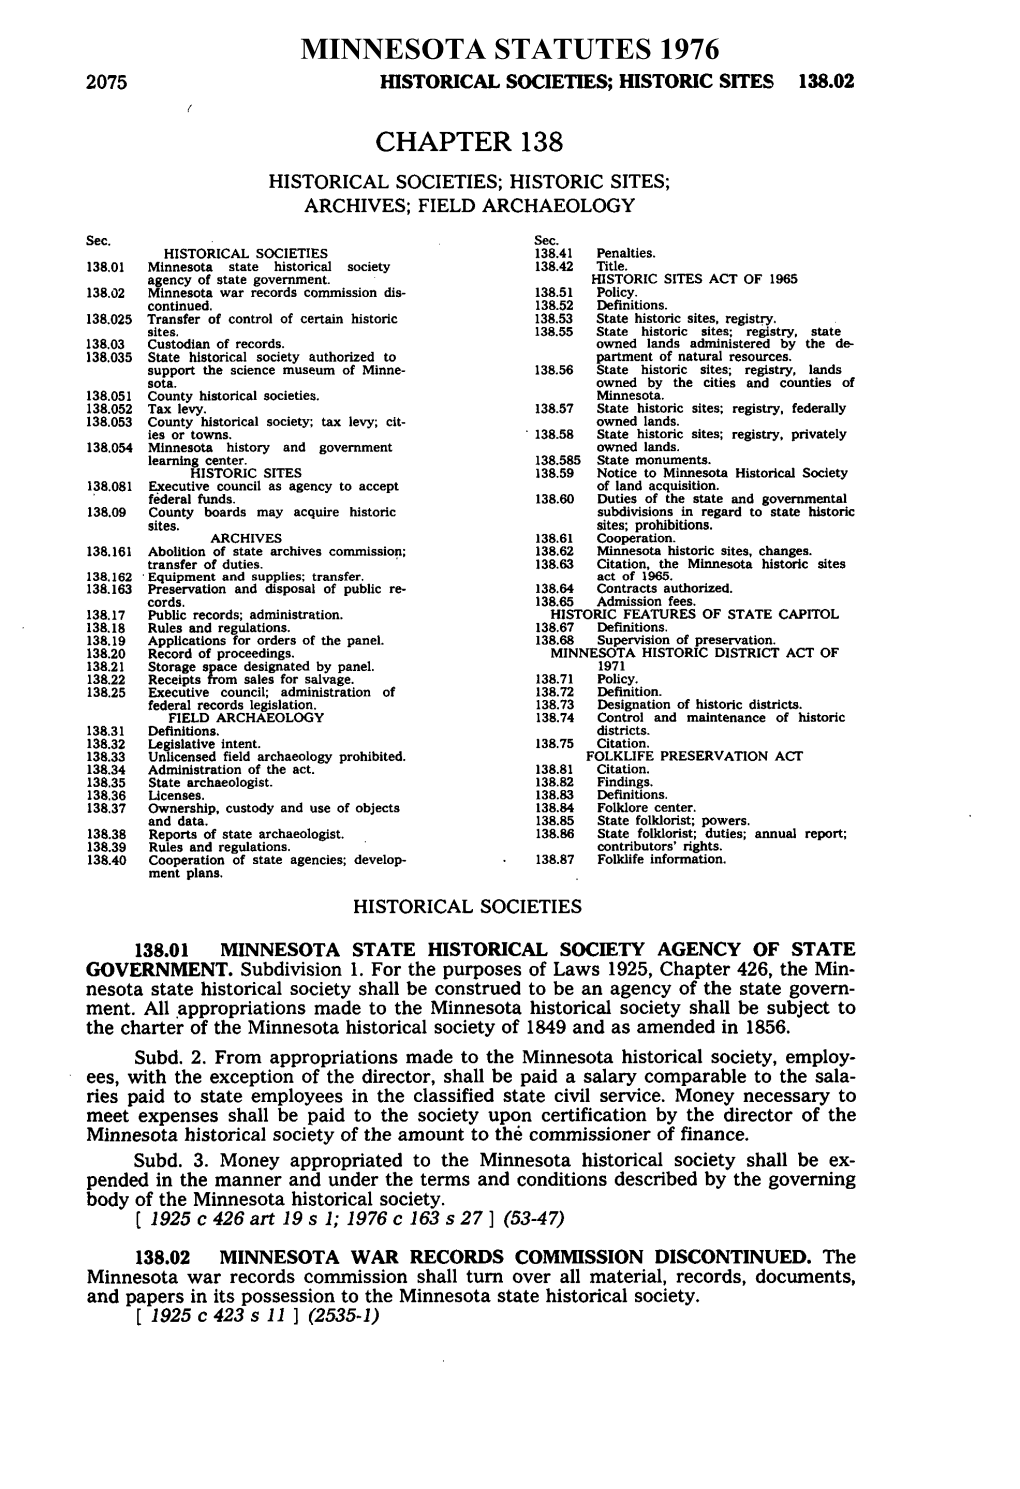 Chapter 138 Minnesota Statutes 1976